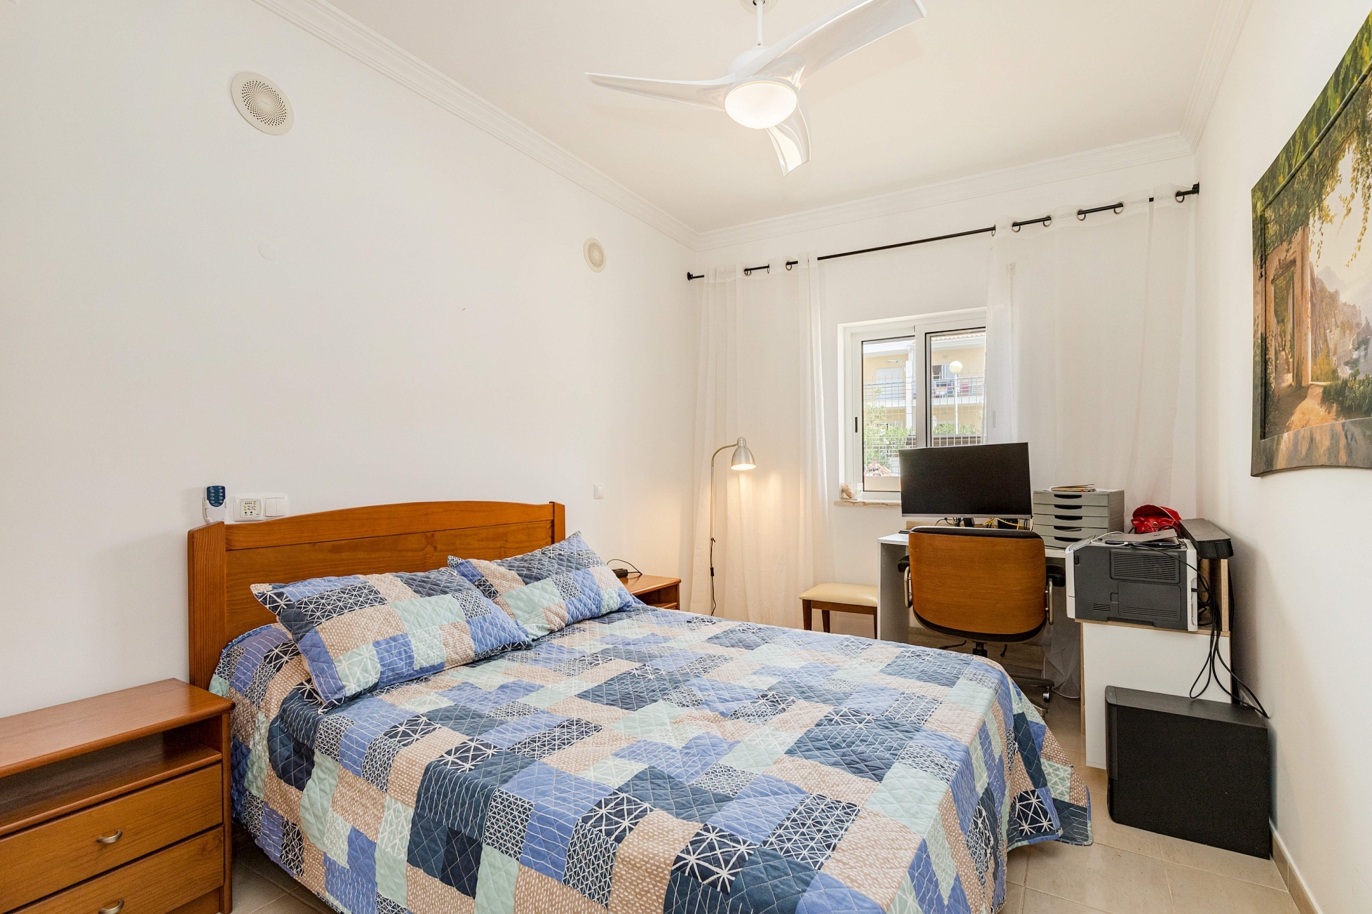 Apartamento T2, em condominio, para venda, Albufeira, Algarve_201450